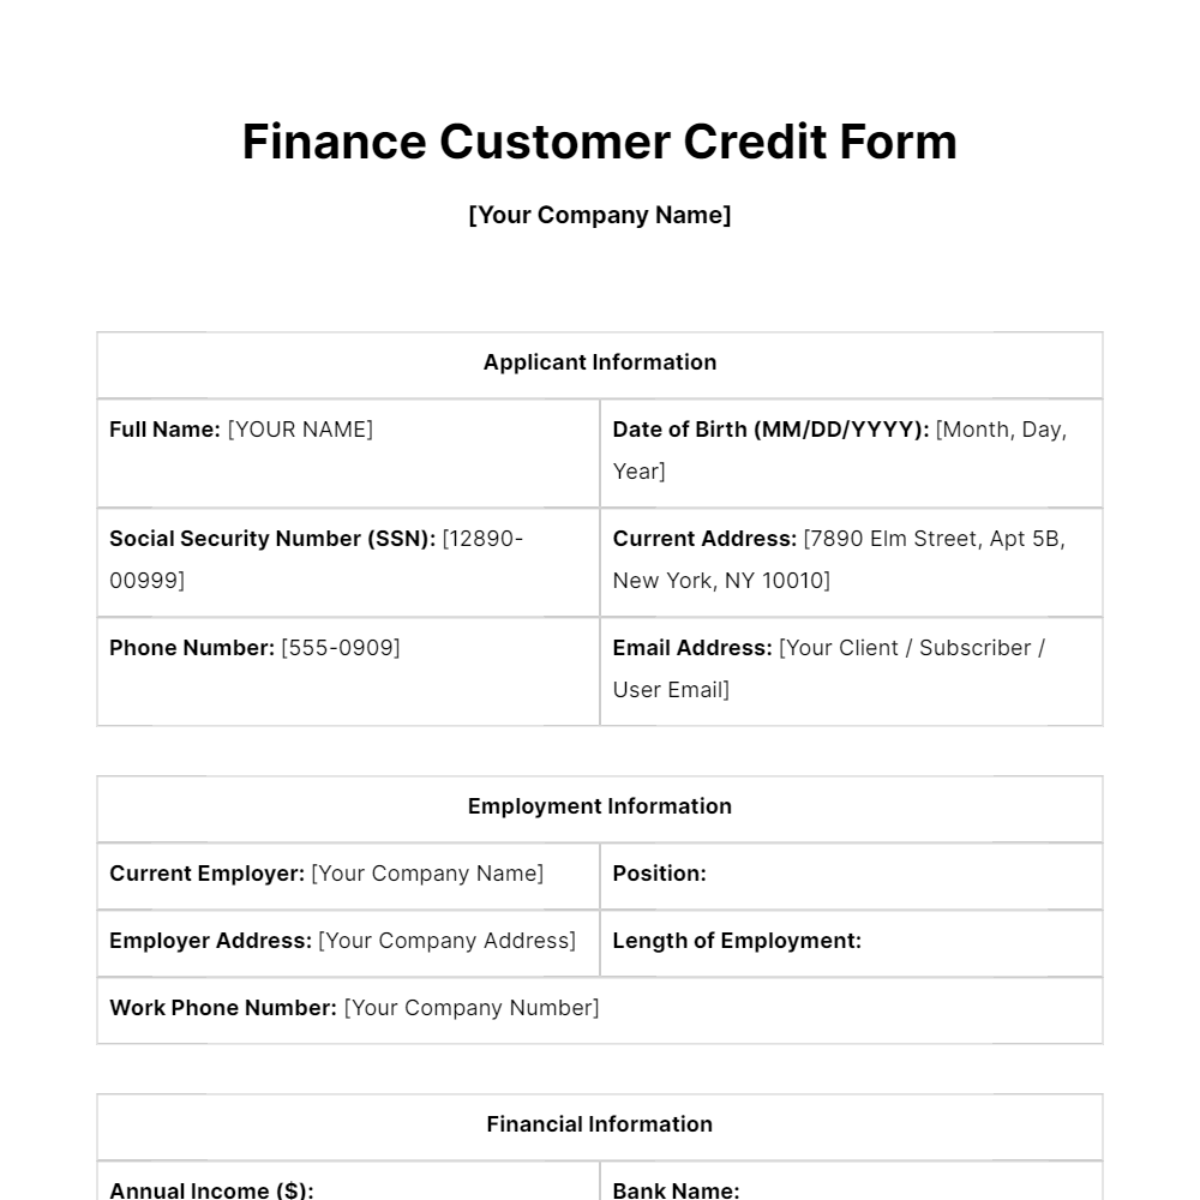 Finance Customer Credit Form Template